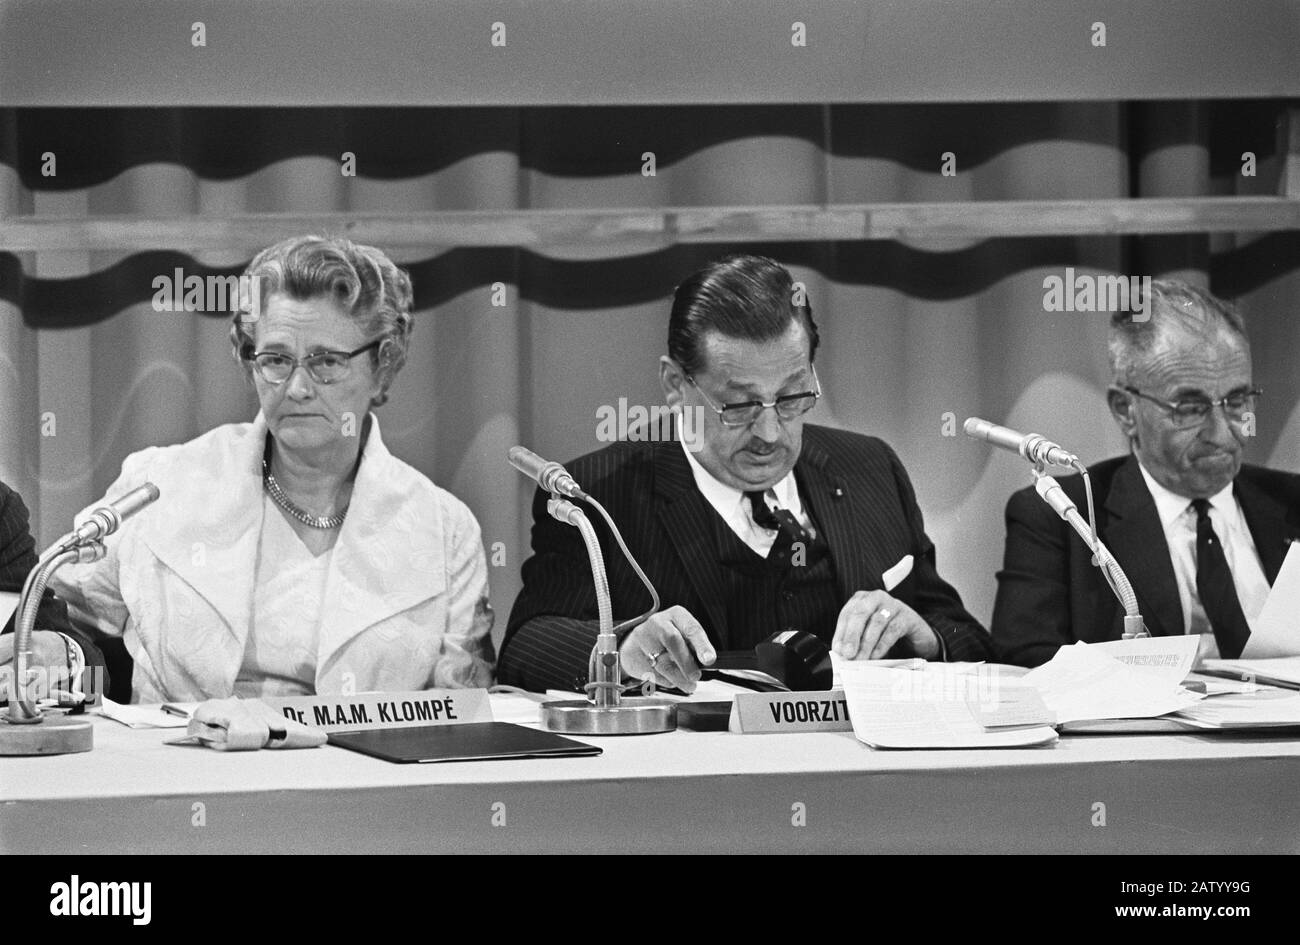 Minister Klompe installs Board Dutch Broadcasting Foundation, Hilversum left Klompe right Schuttenhelm Date: May 29, 1969 Location: Hilversum Keywords: plants, ministers Person Name: Klompé, Marga Stock Photo